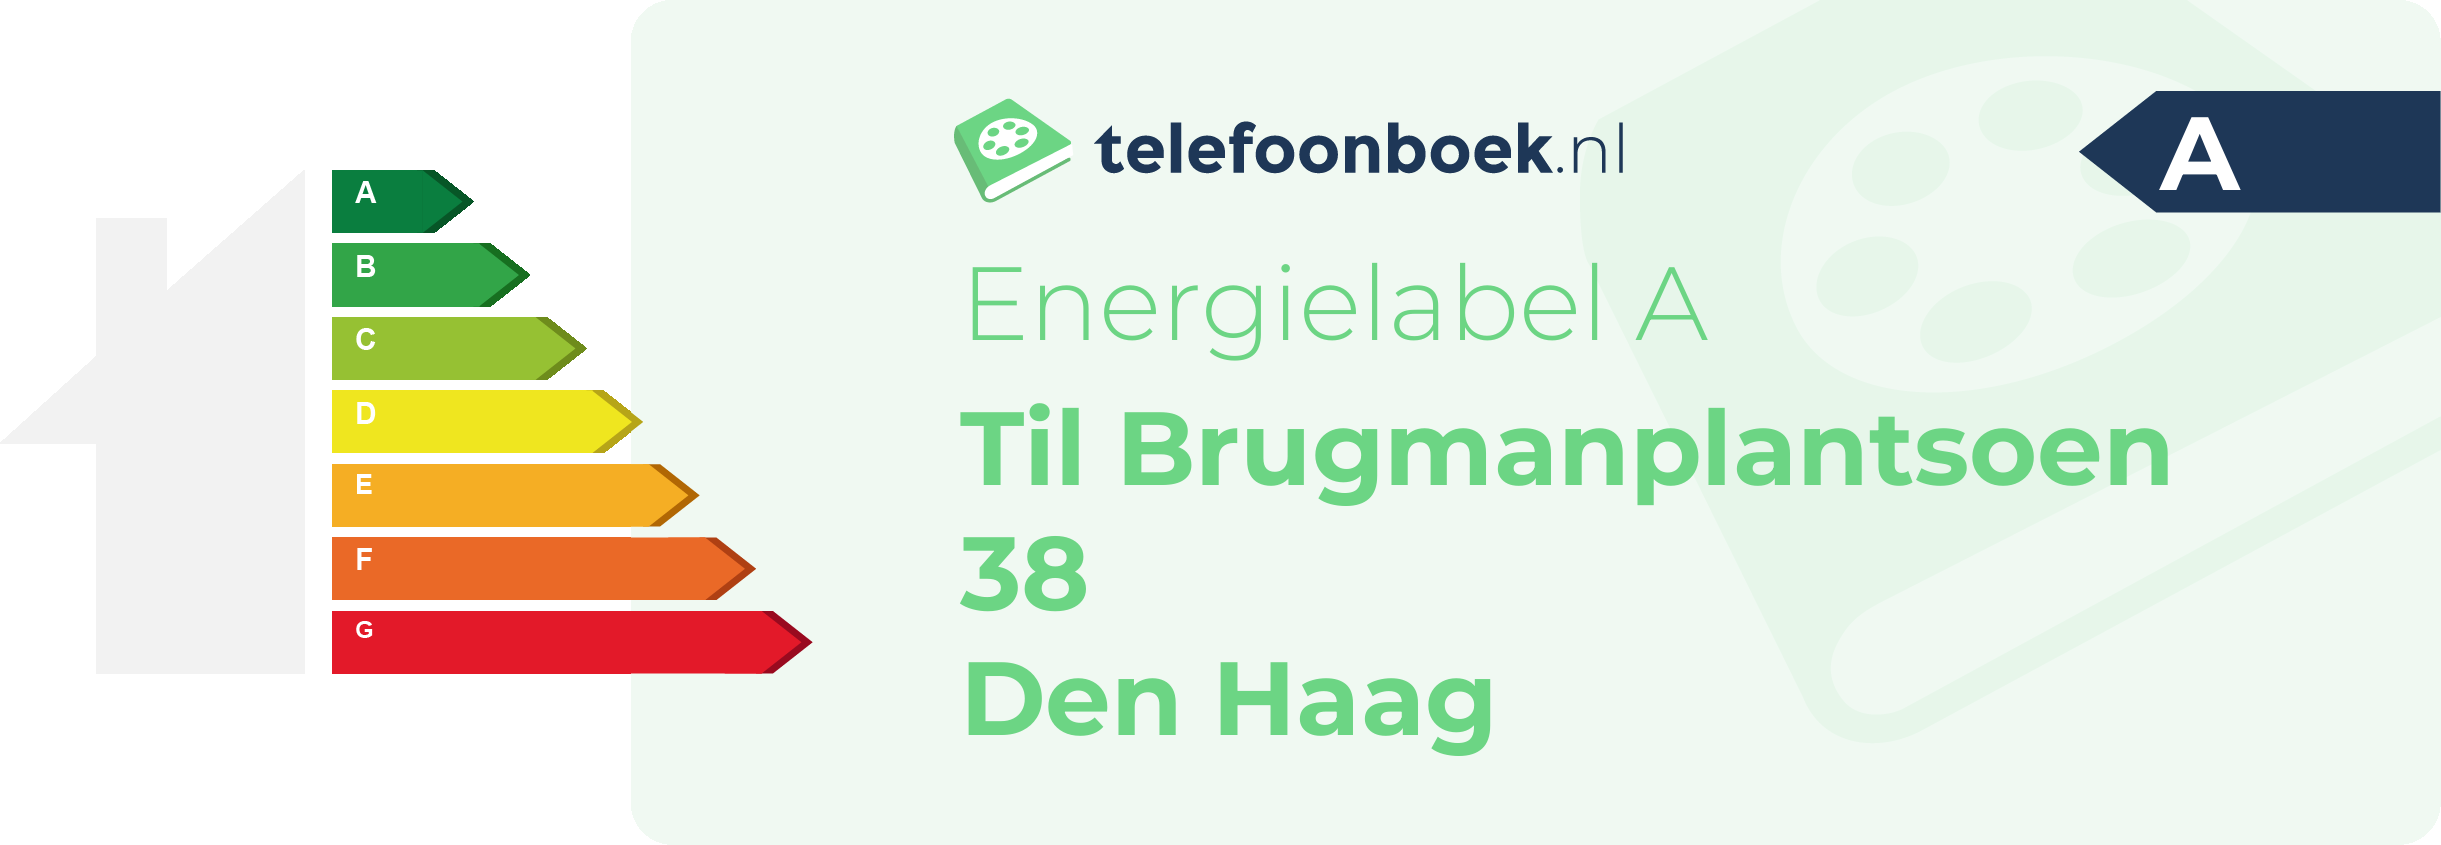 Energielabel Til Brugmanplantsoen 38 Den Haag